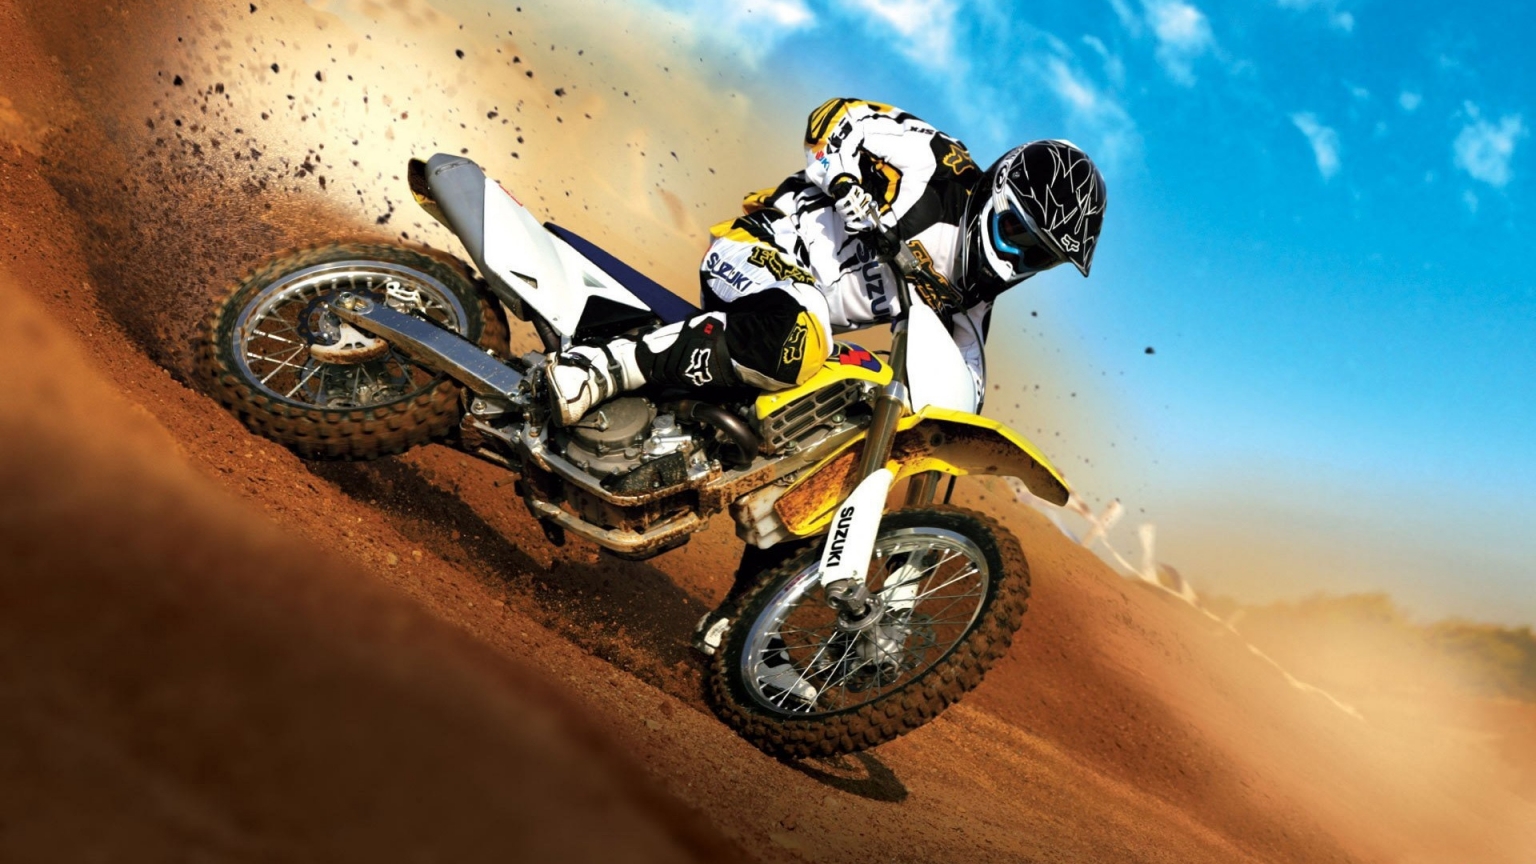 Moto Sports for 1536 x 864 HDTV resolution